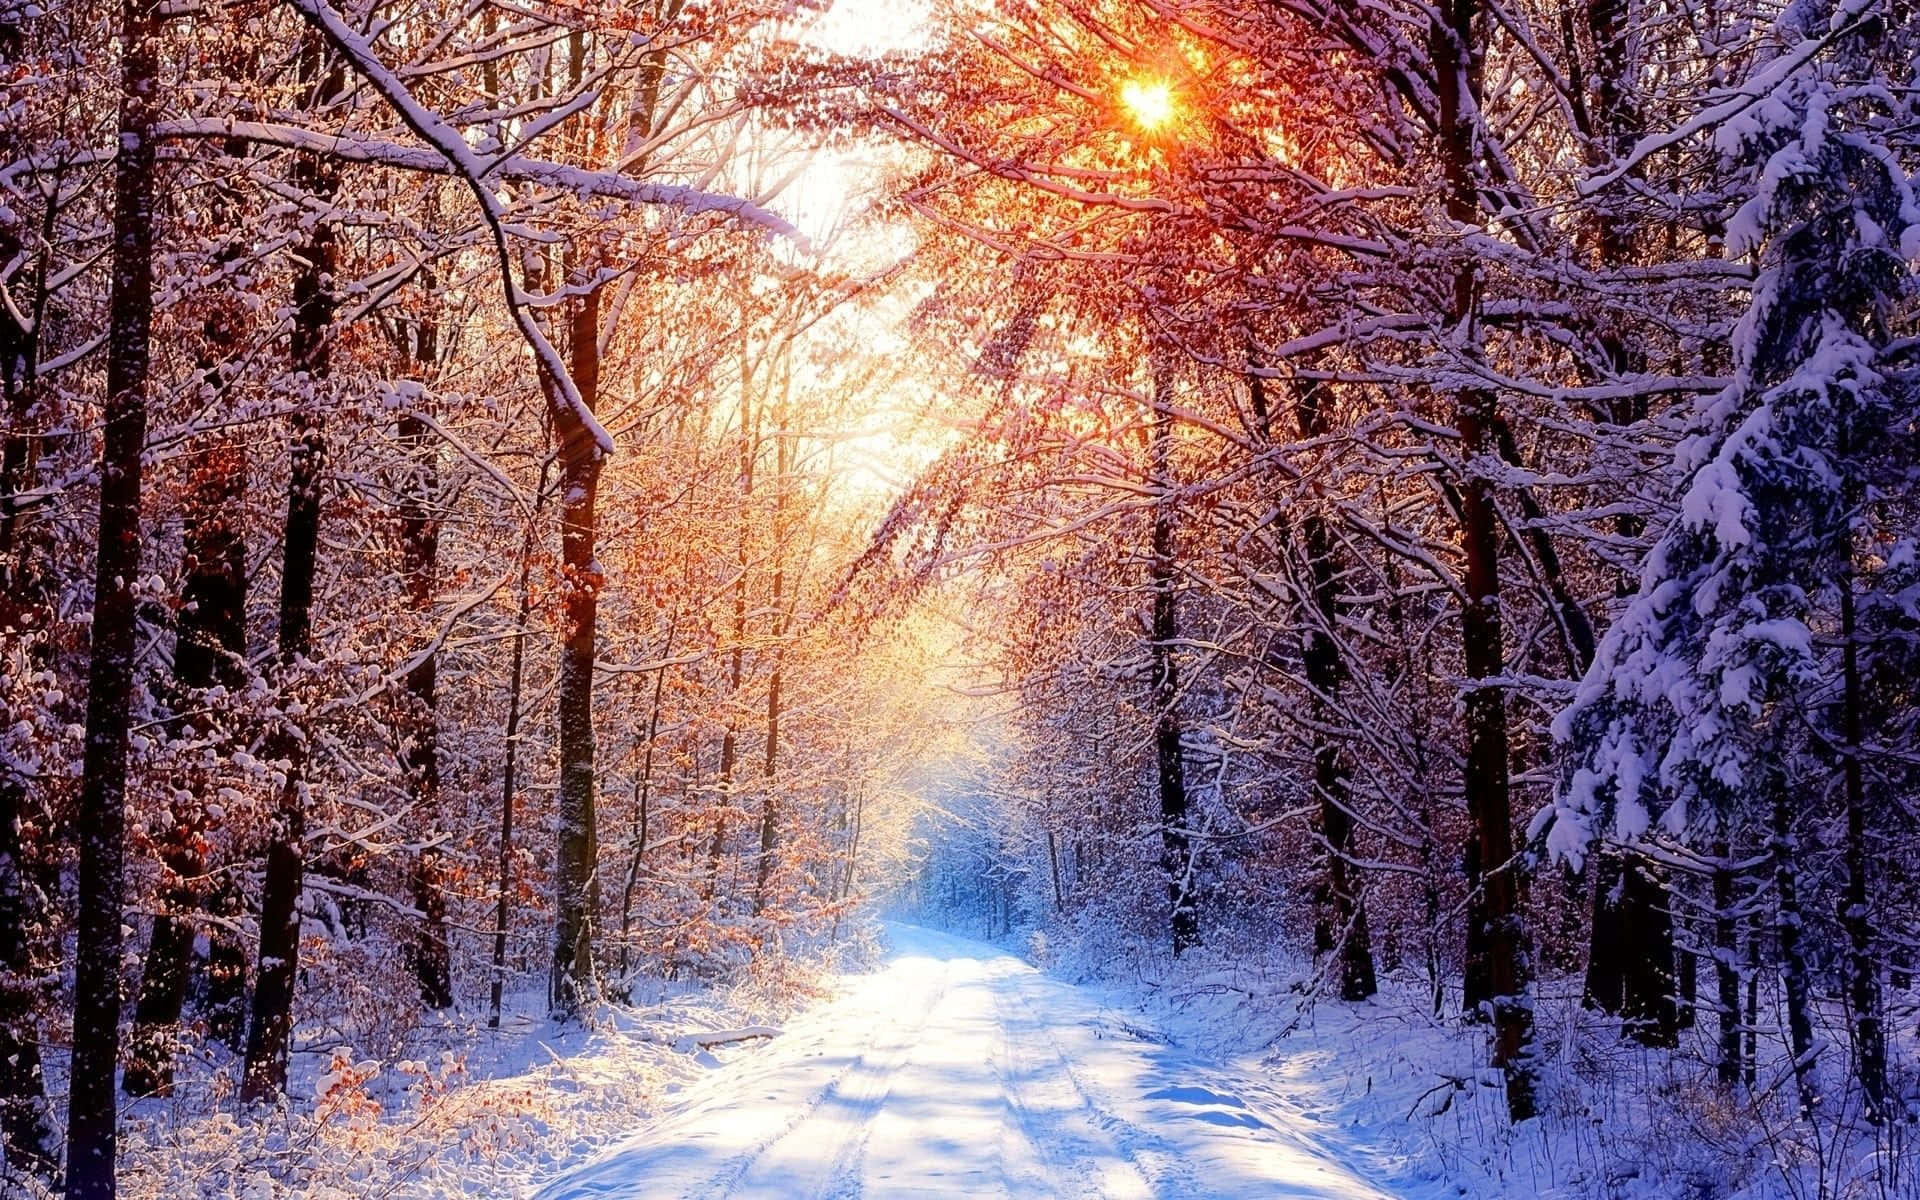 Magical Winter Solstice Scenery